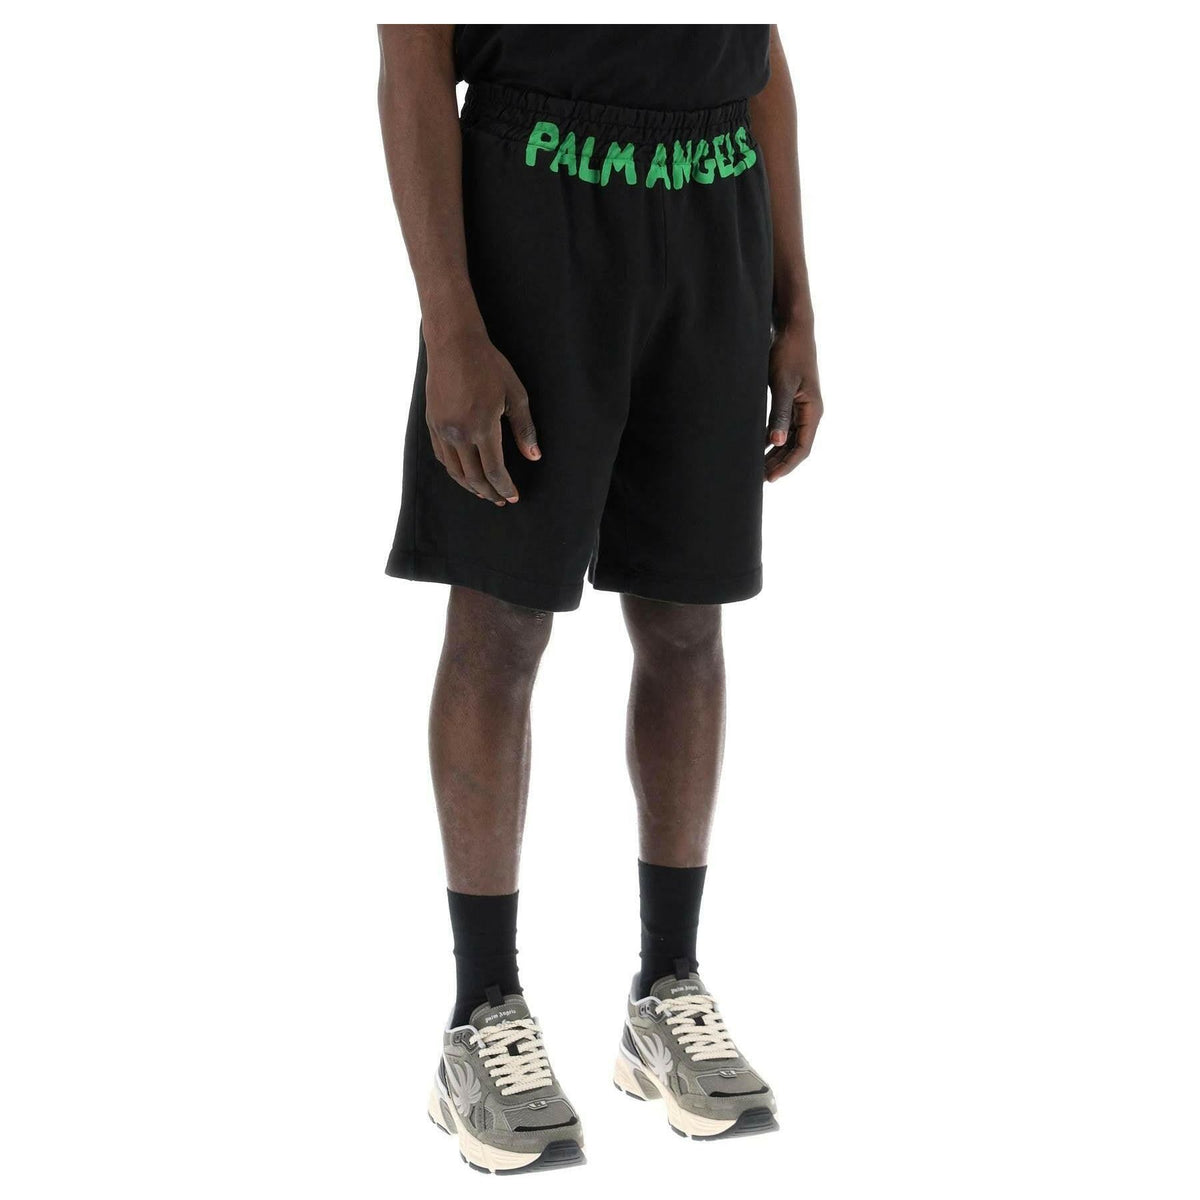 PALM ANGELS - Black and Fluorescent Green Logo Cotton Shorts - JOHN JULIA